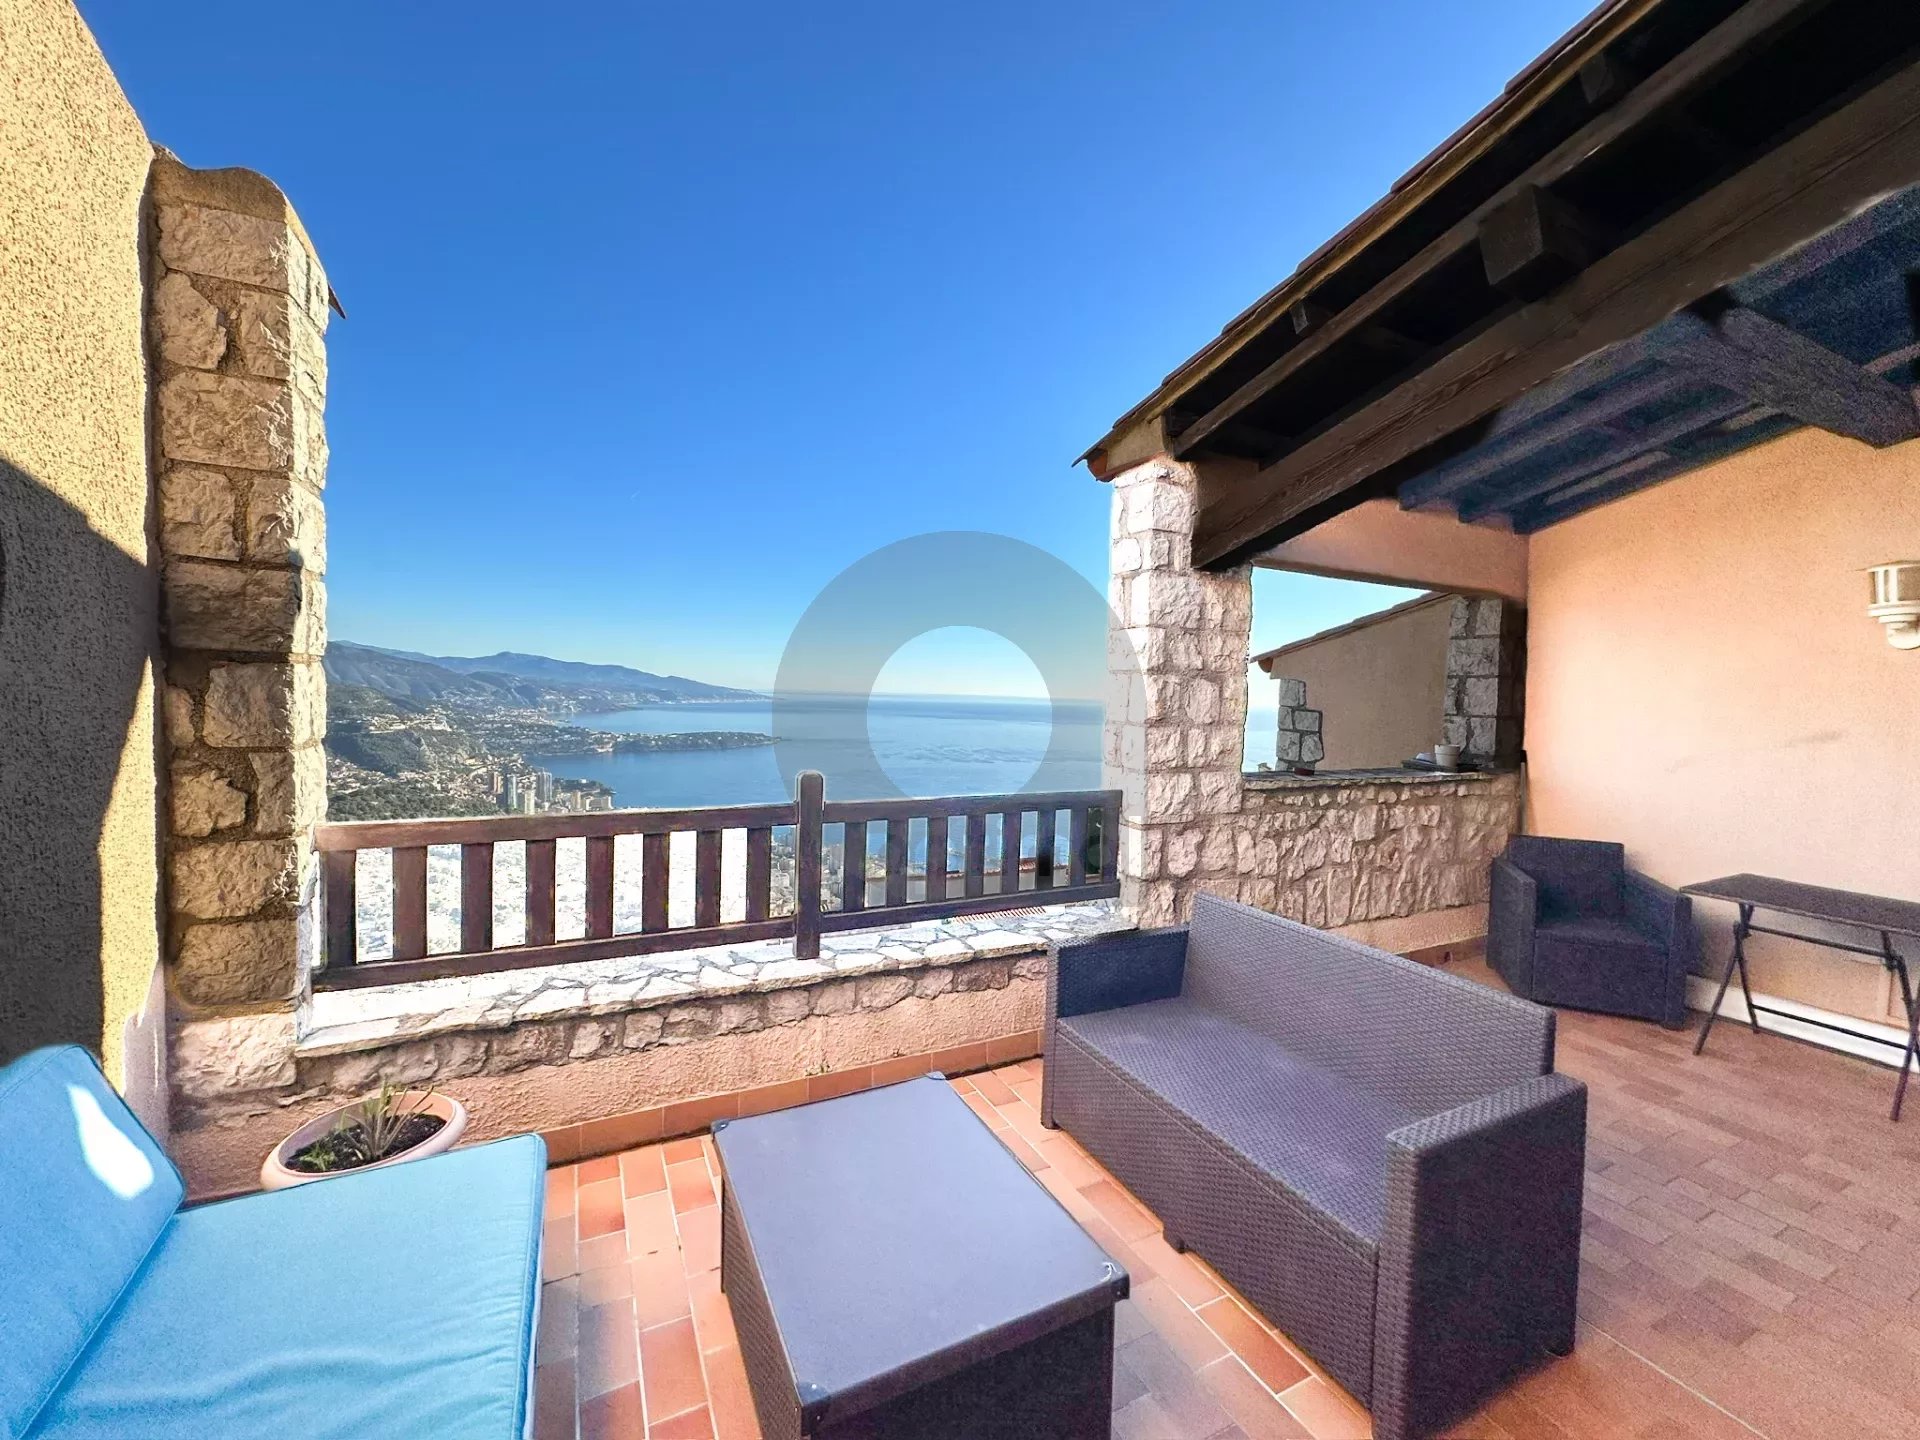 Twin Villa with Panoramic View of Monaco, Cap Martin, and Italy - La Turbie